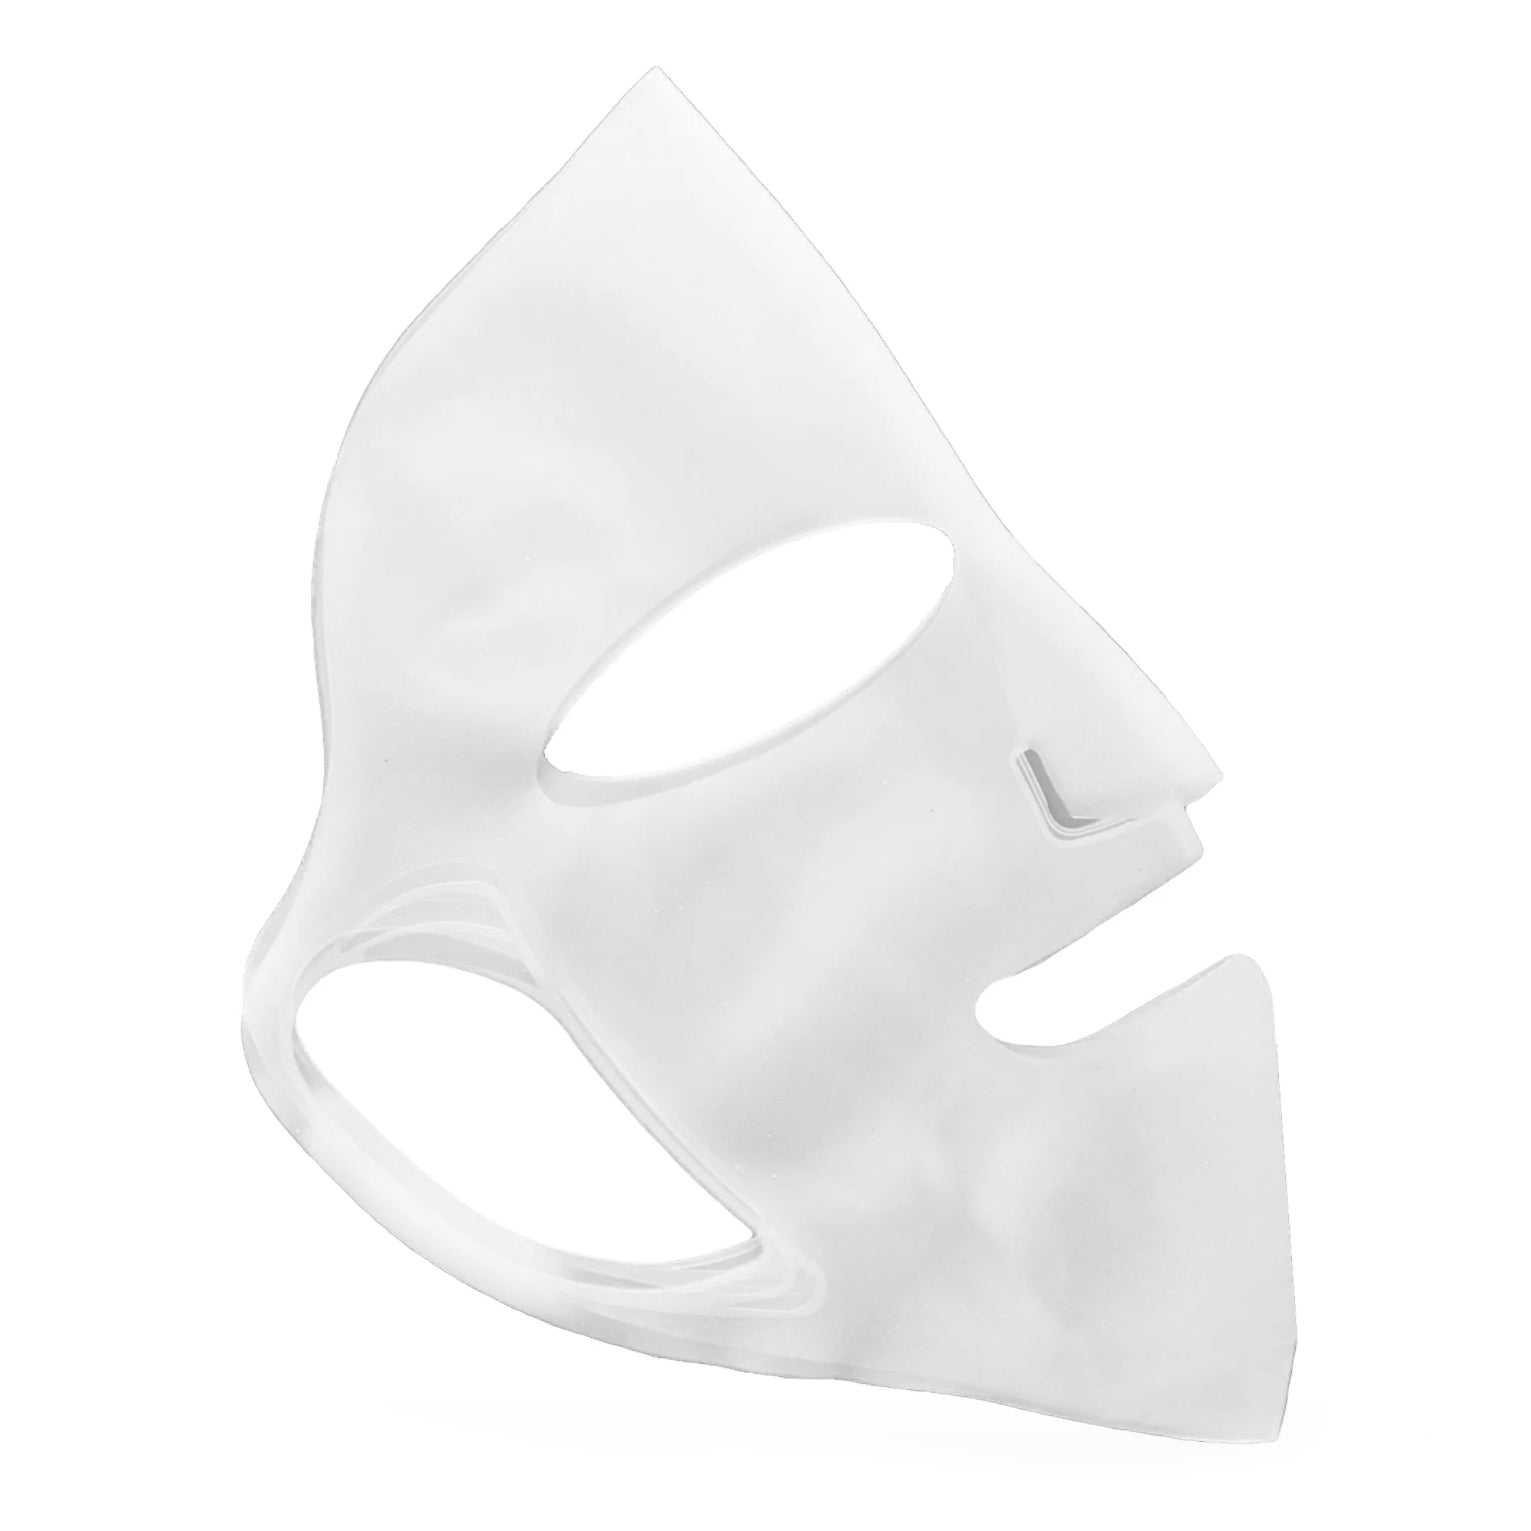 hydrating silicone sheet mask